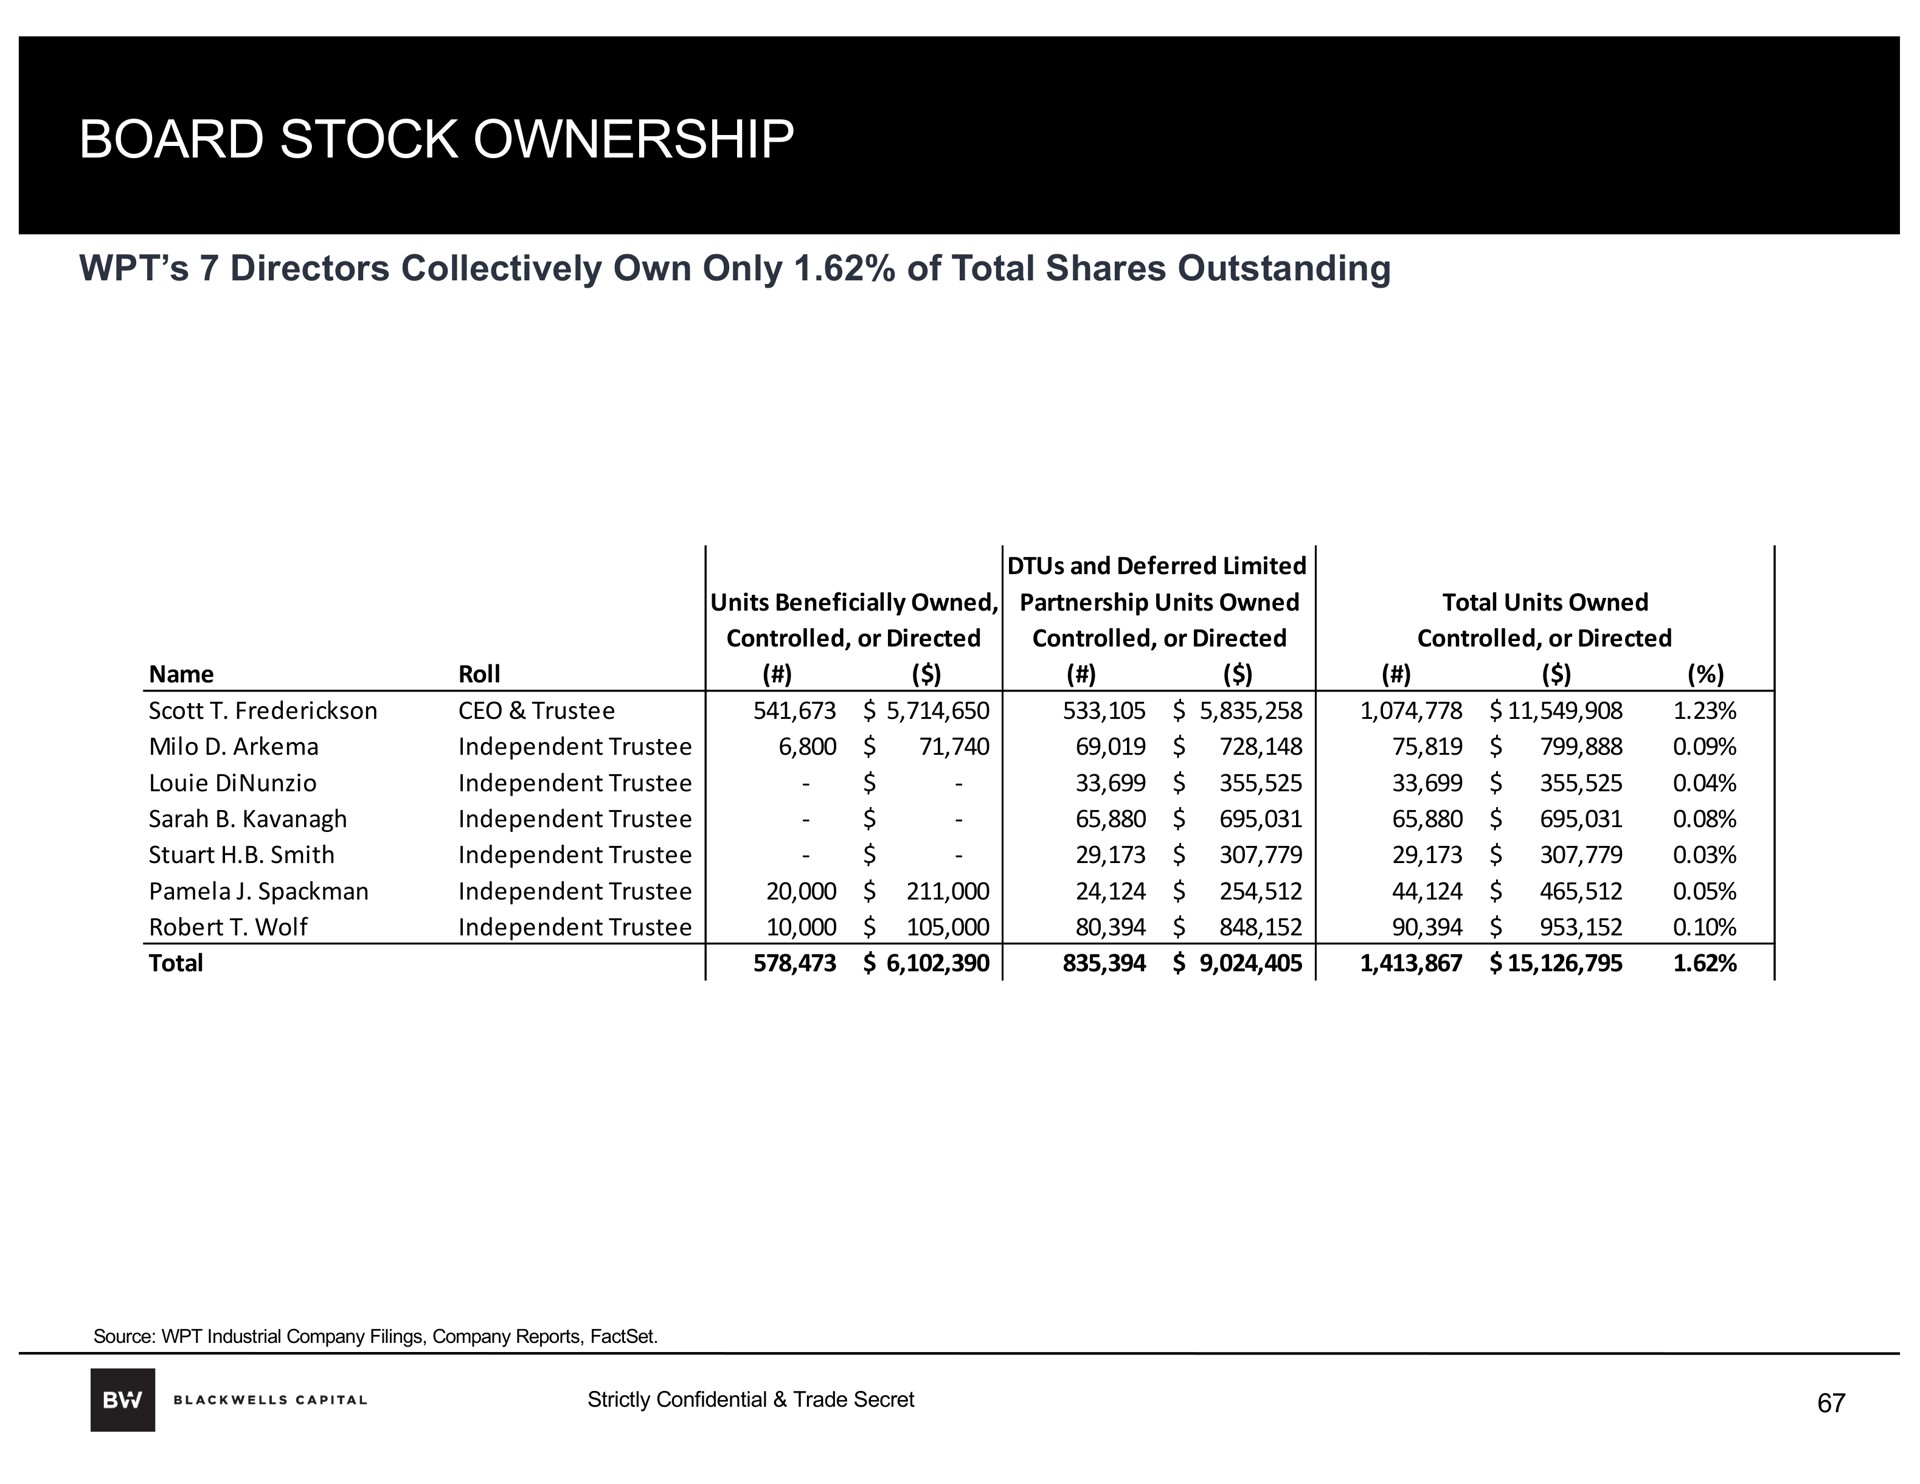 board stock ownership | Blackwells Capital